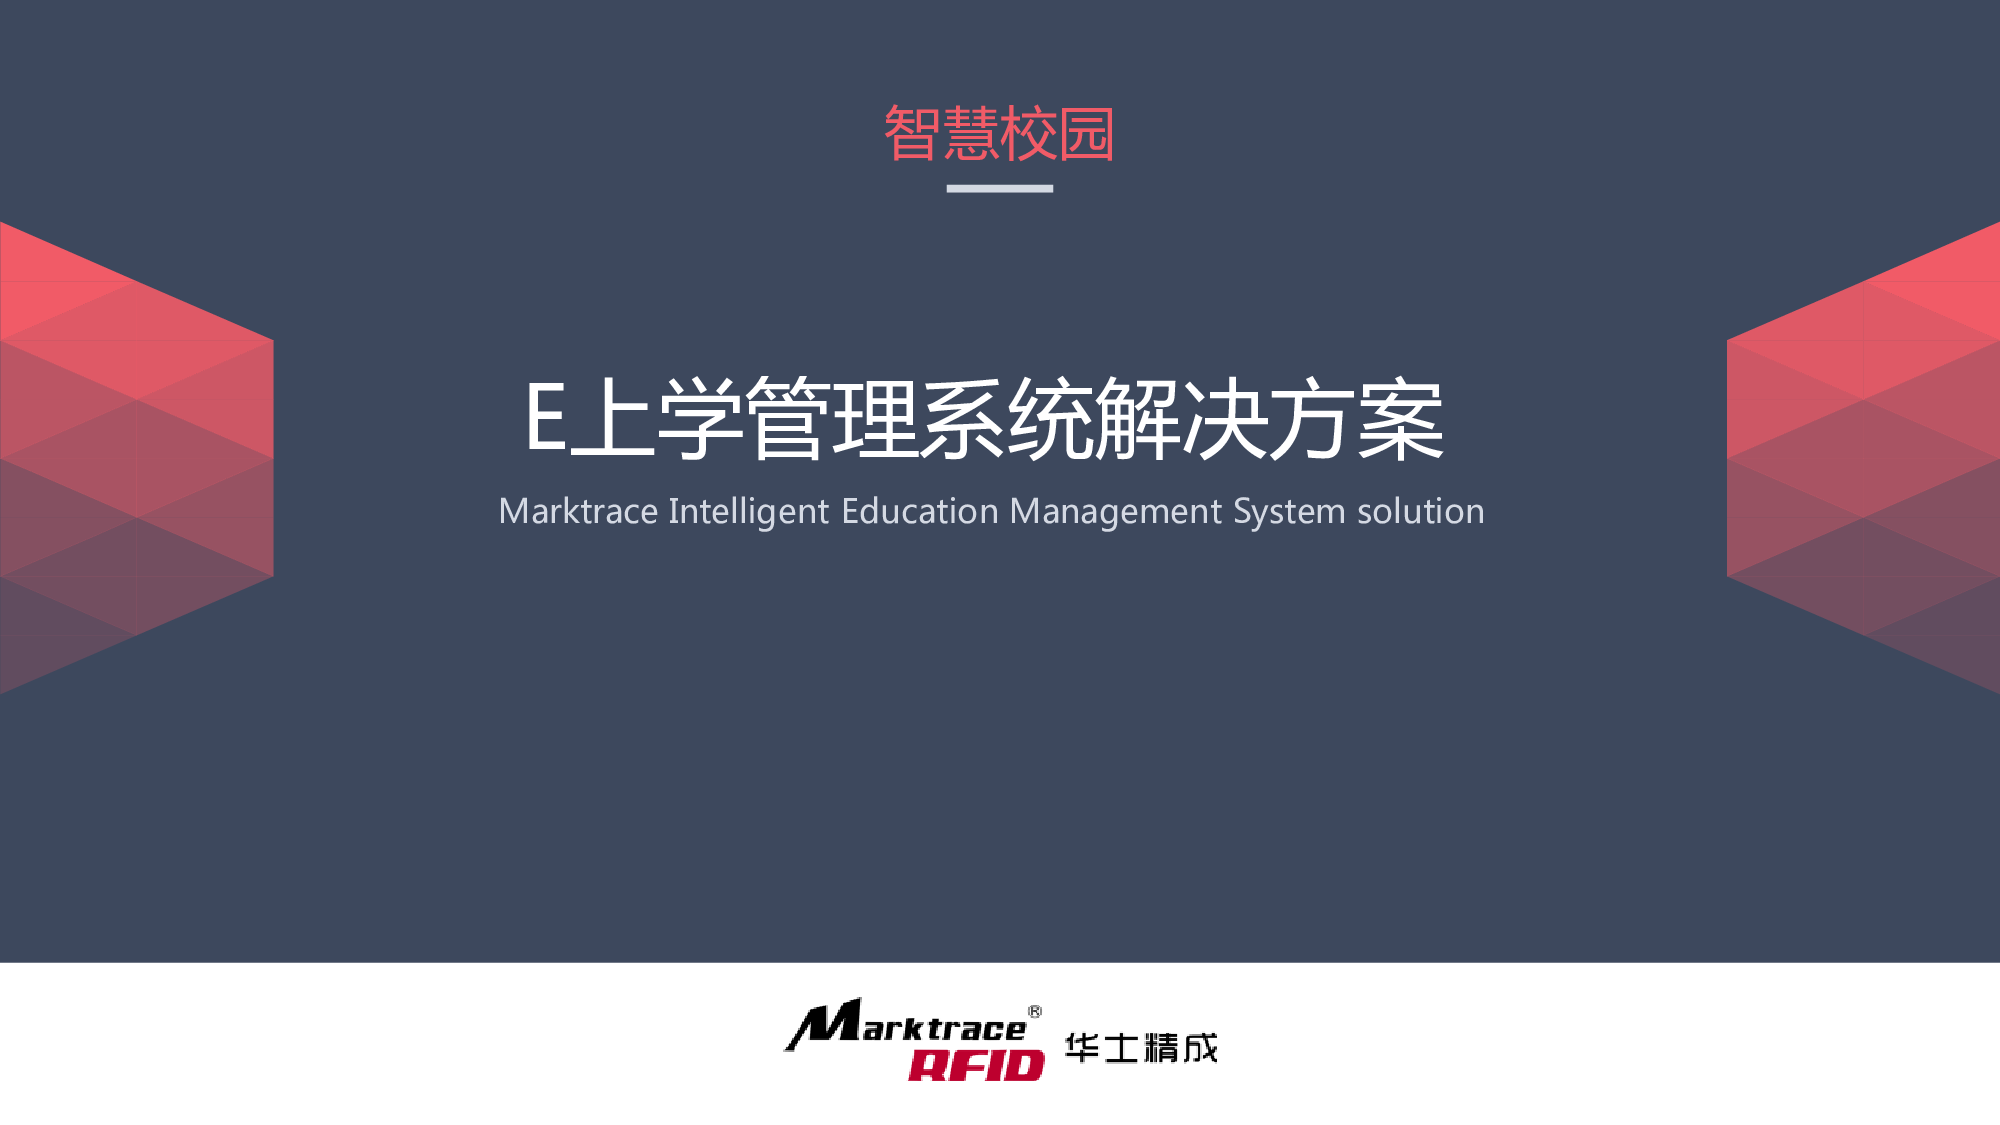 E上学管理系统解决方案/智慧教育系统解决方案图片